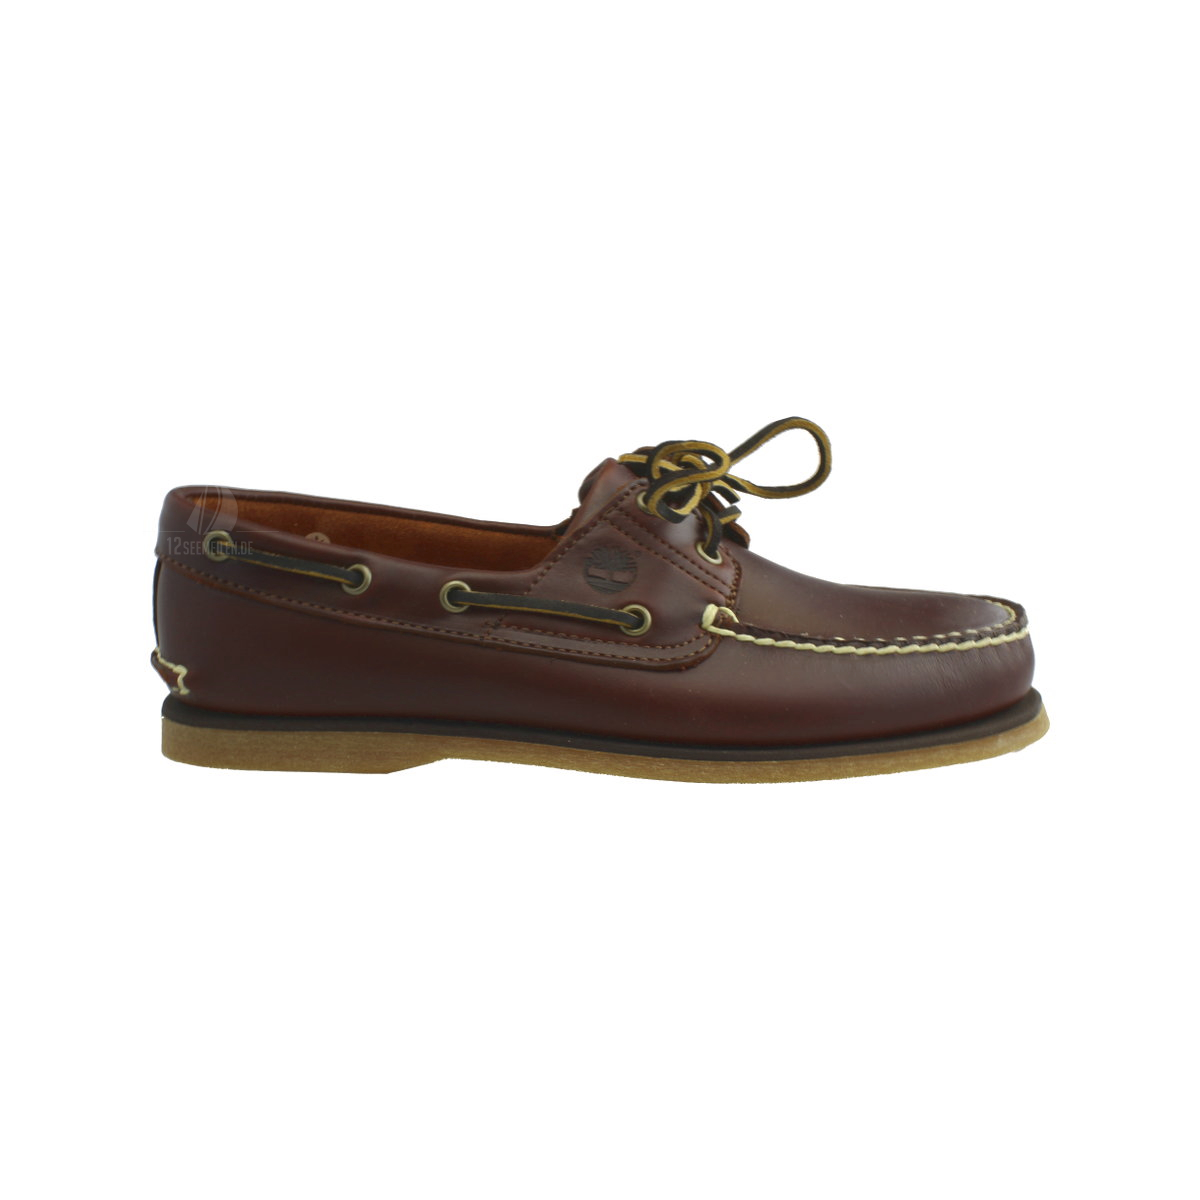 Timberland Classic Boat chaussures bateau Hommes brun - rouge eu 43 ( us 9 )